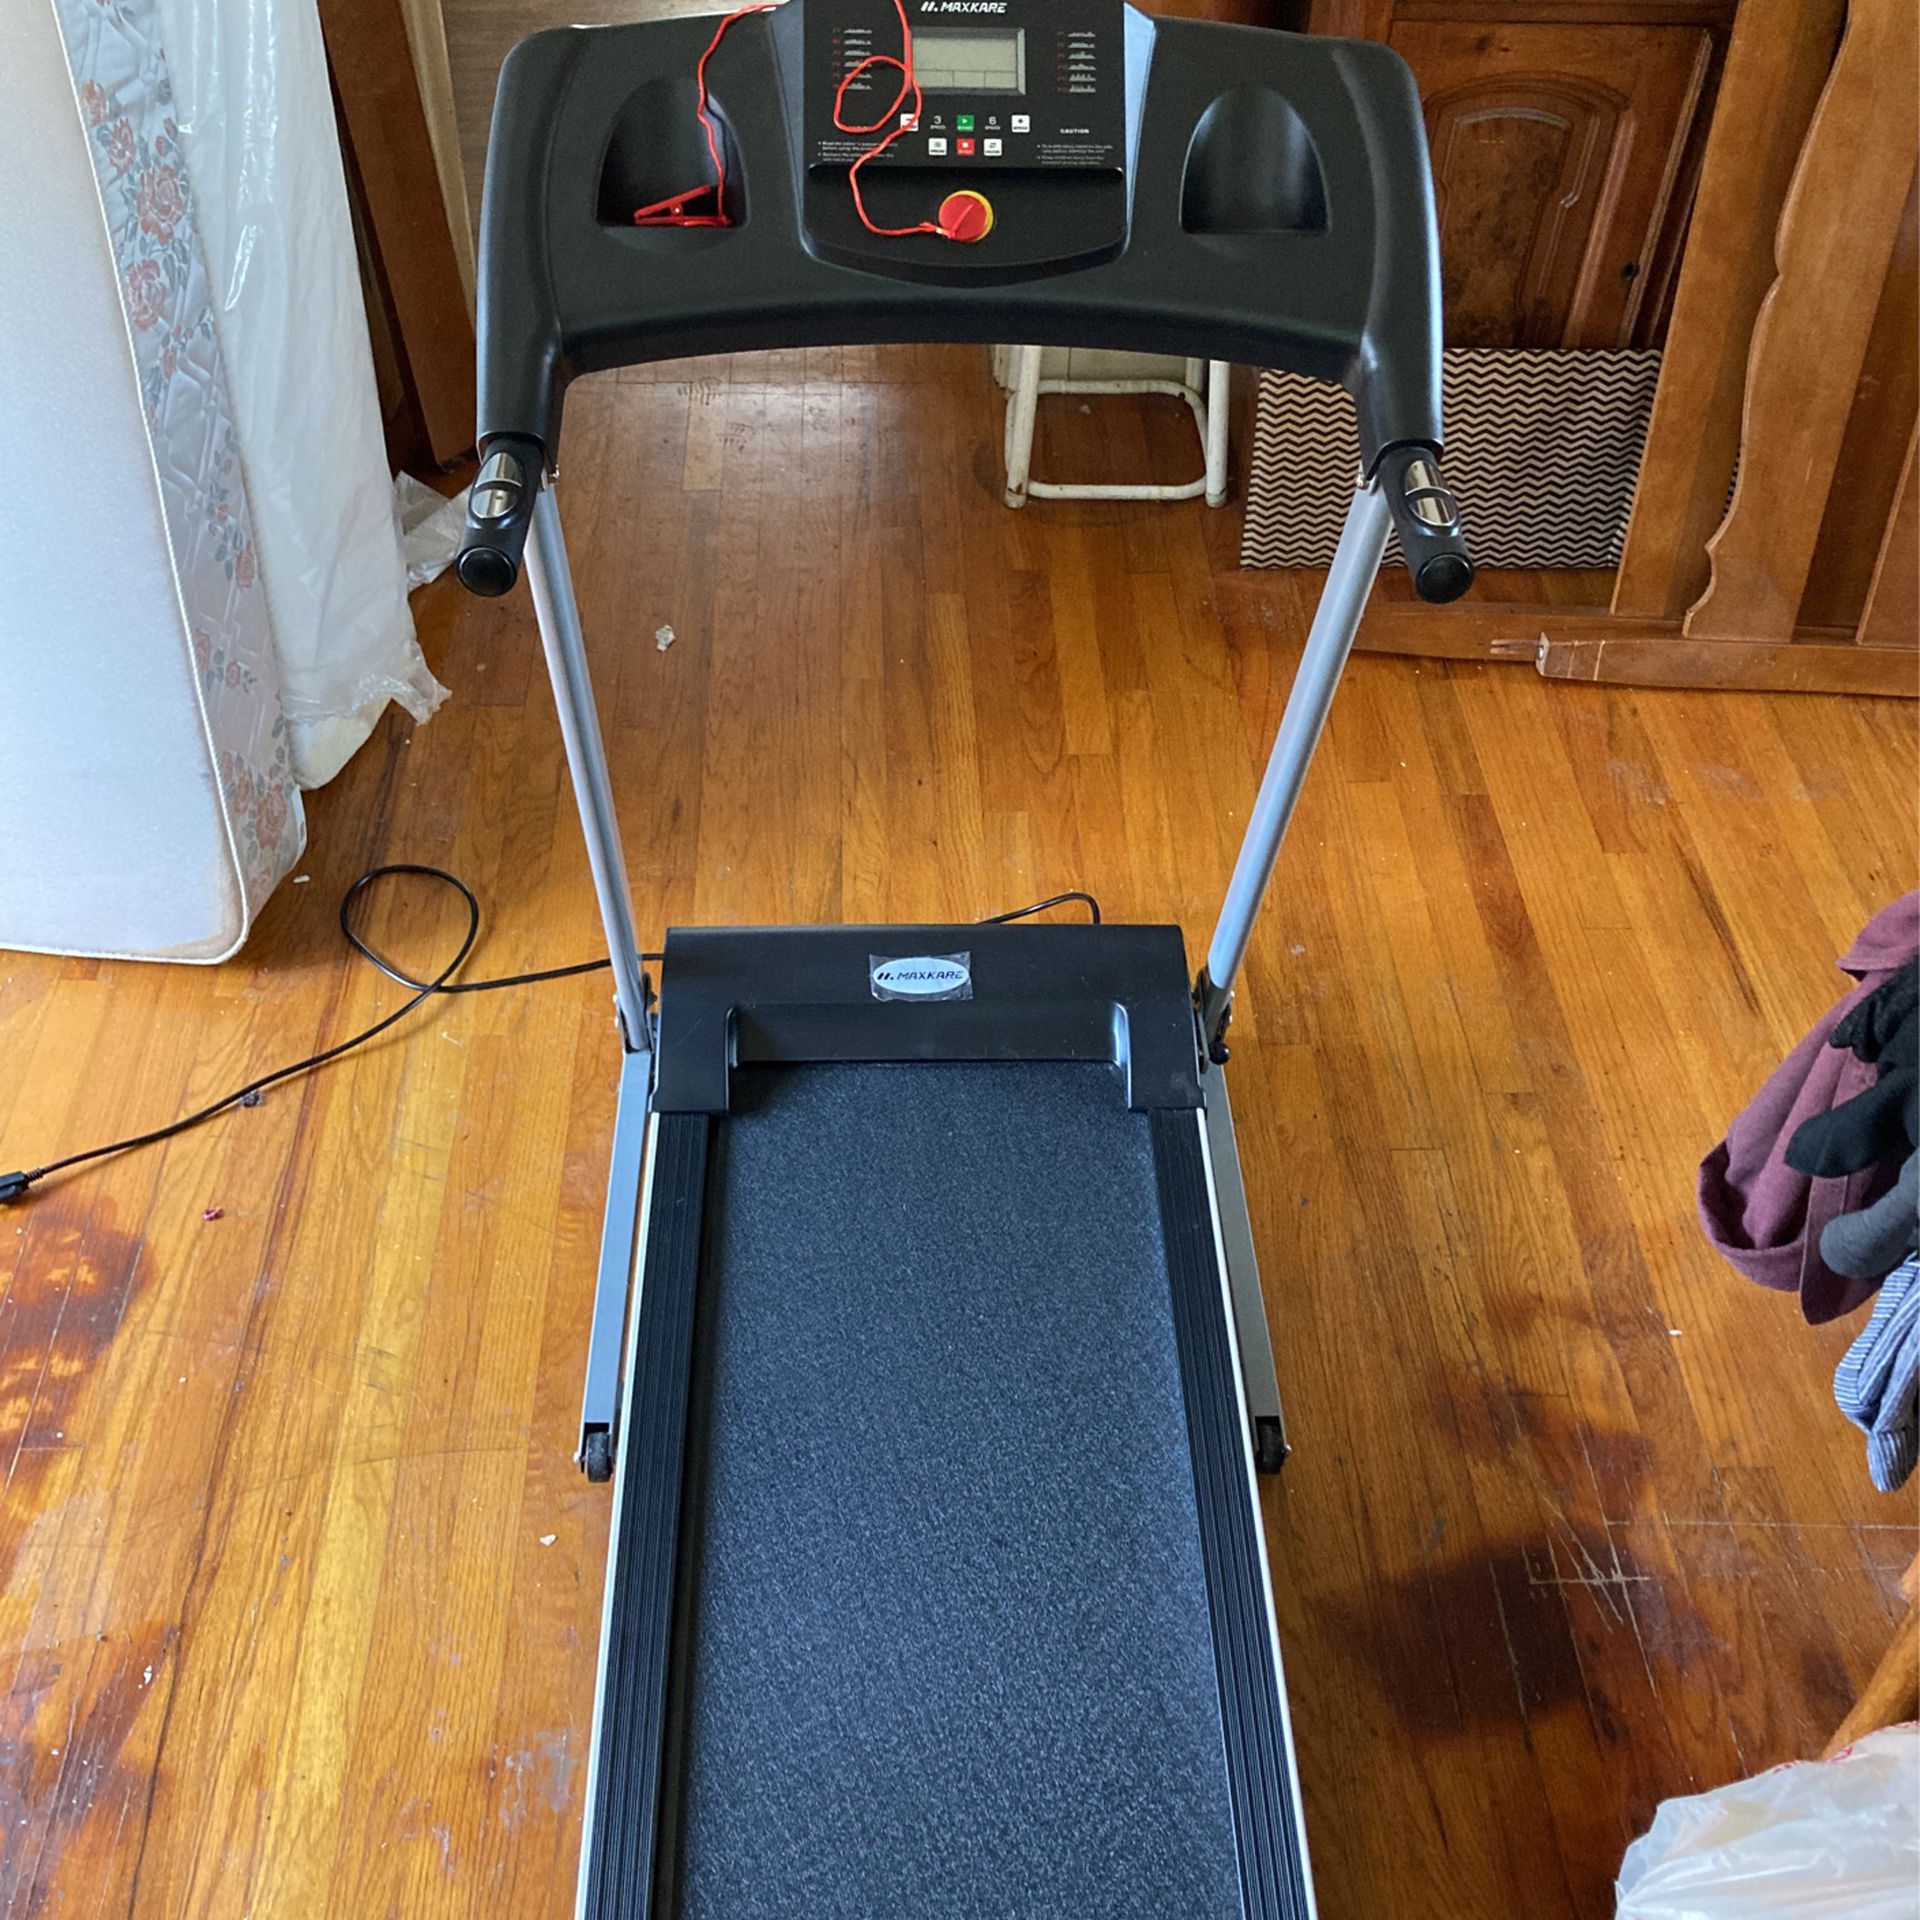 Maxkare Motorized Treadmill